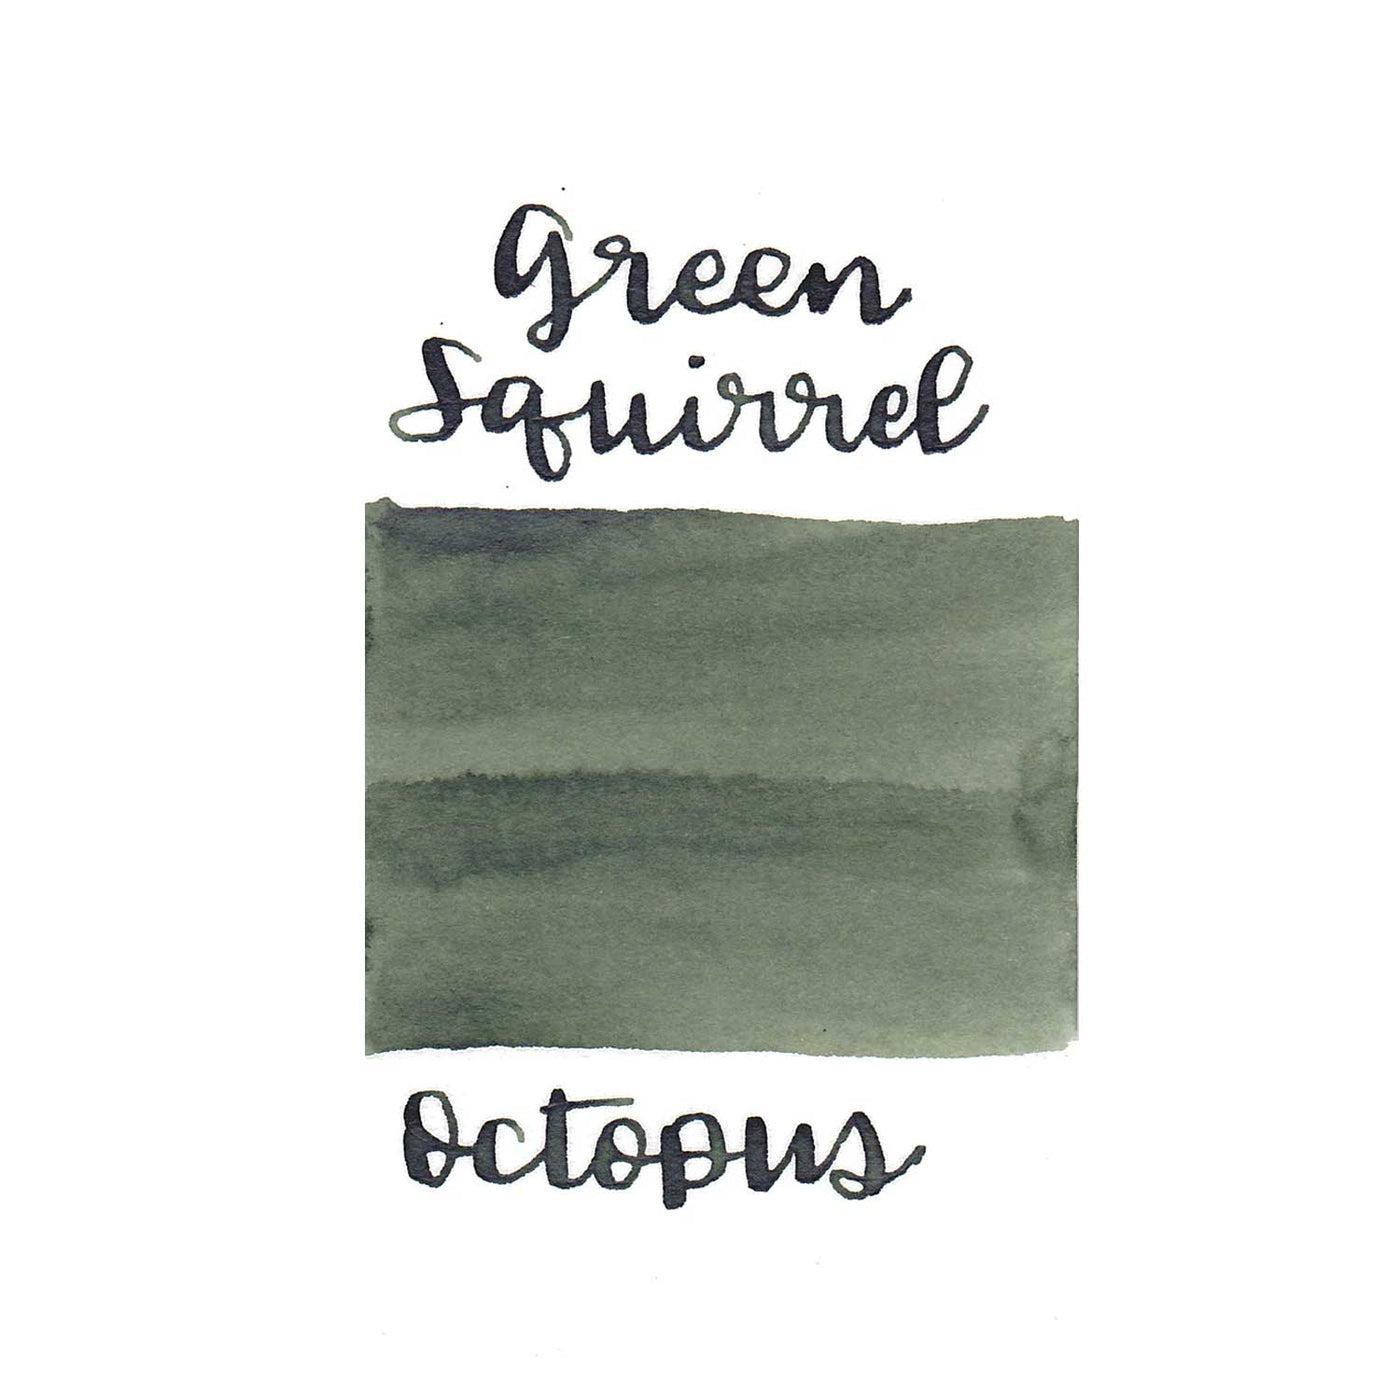 Octopus Write & Draw Ink Bottle, Green Squirrel - 50ml 2